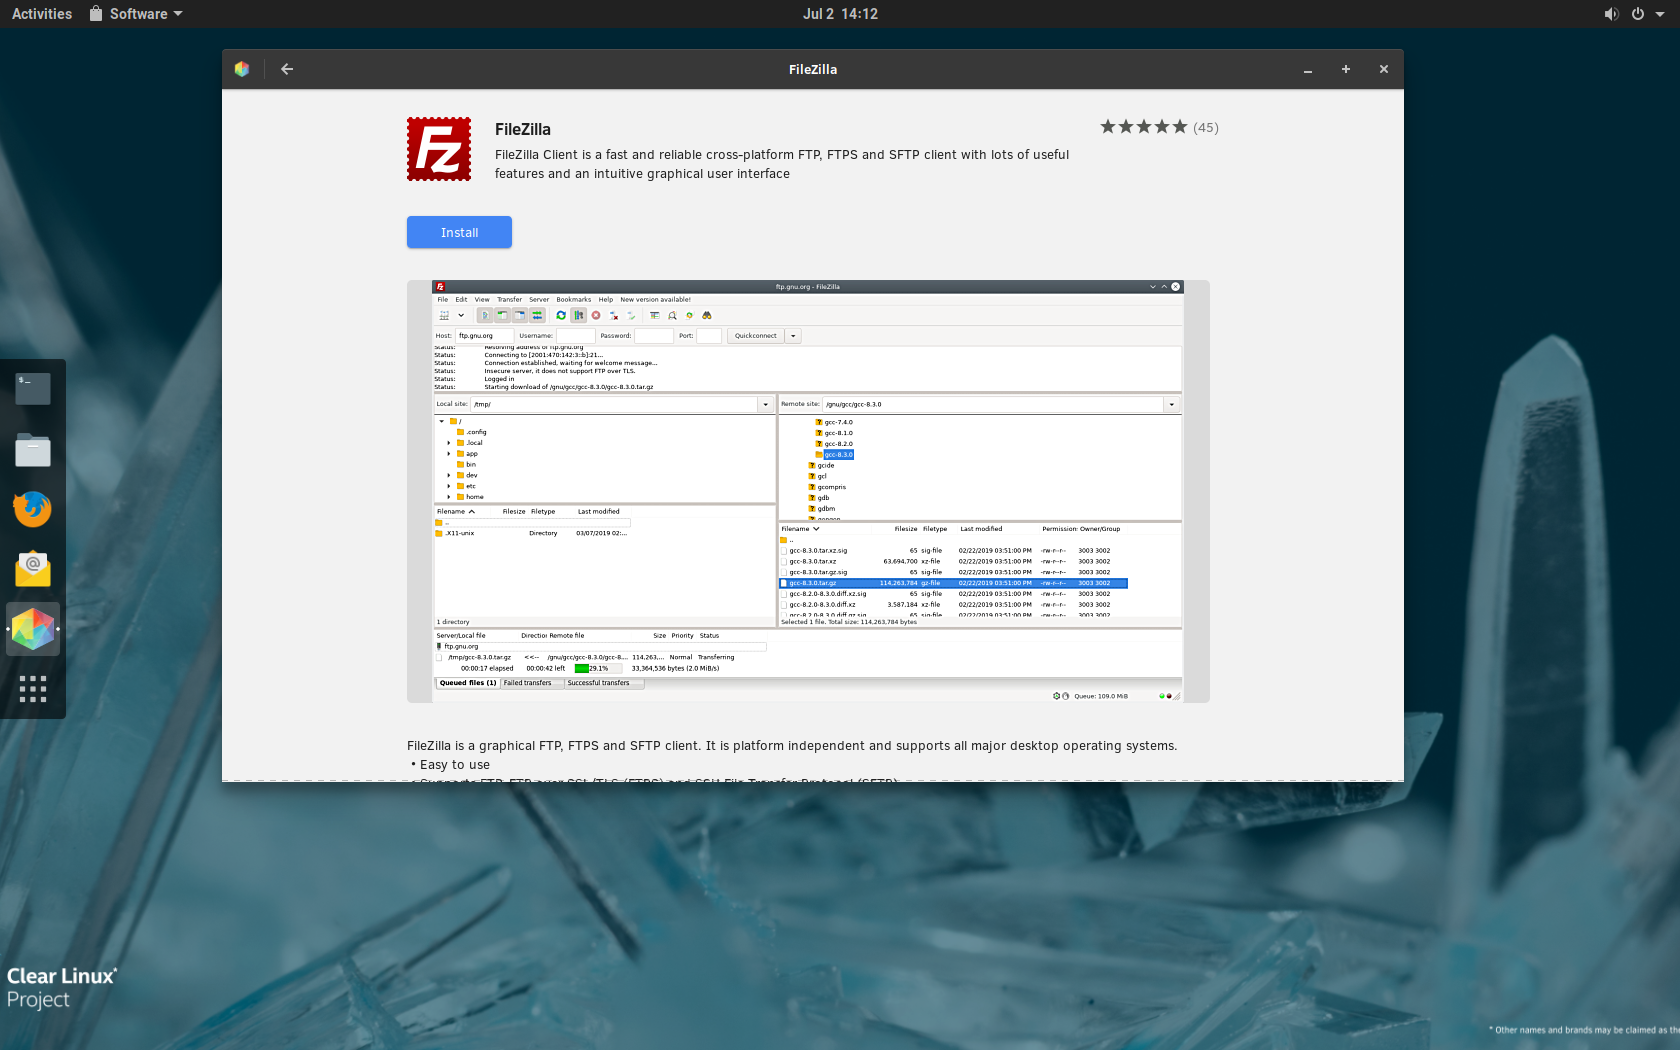 Filezilla Flatpak detail page in GNOME Software